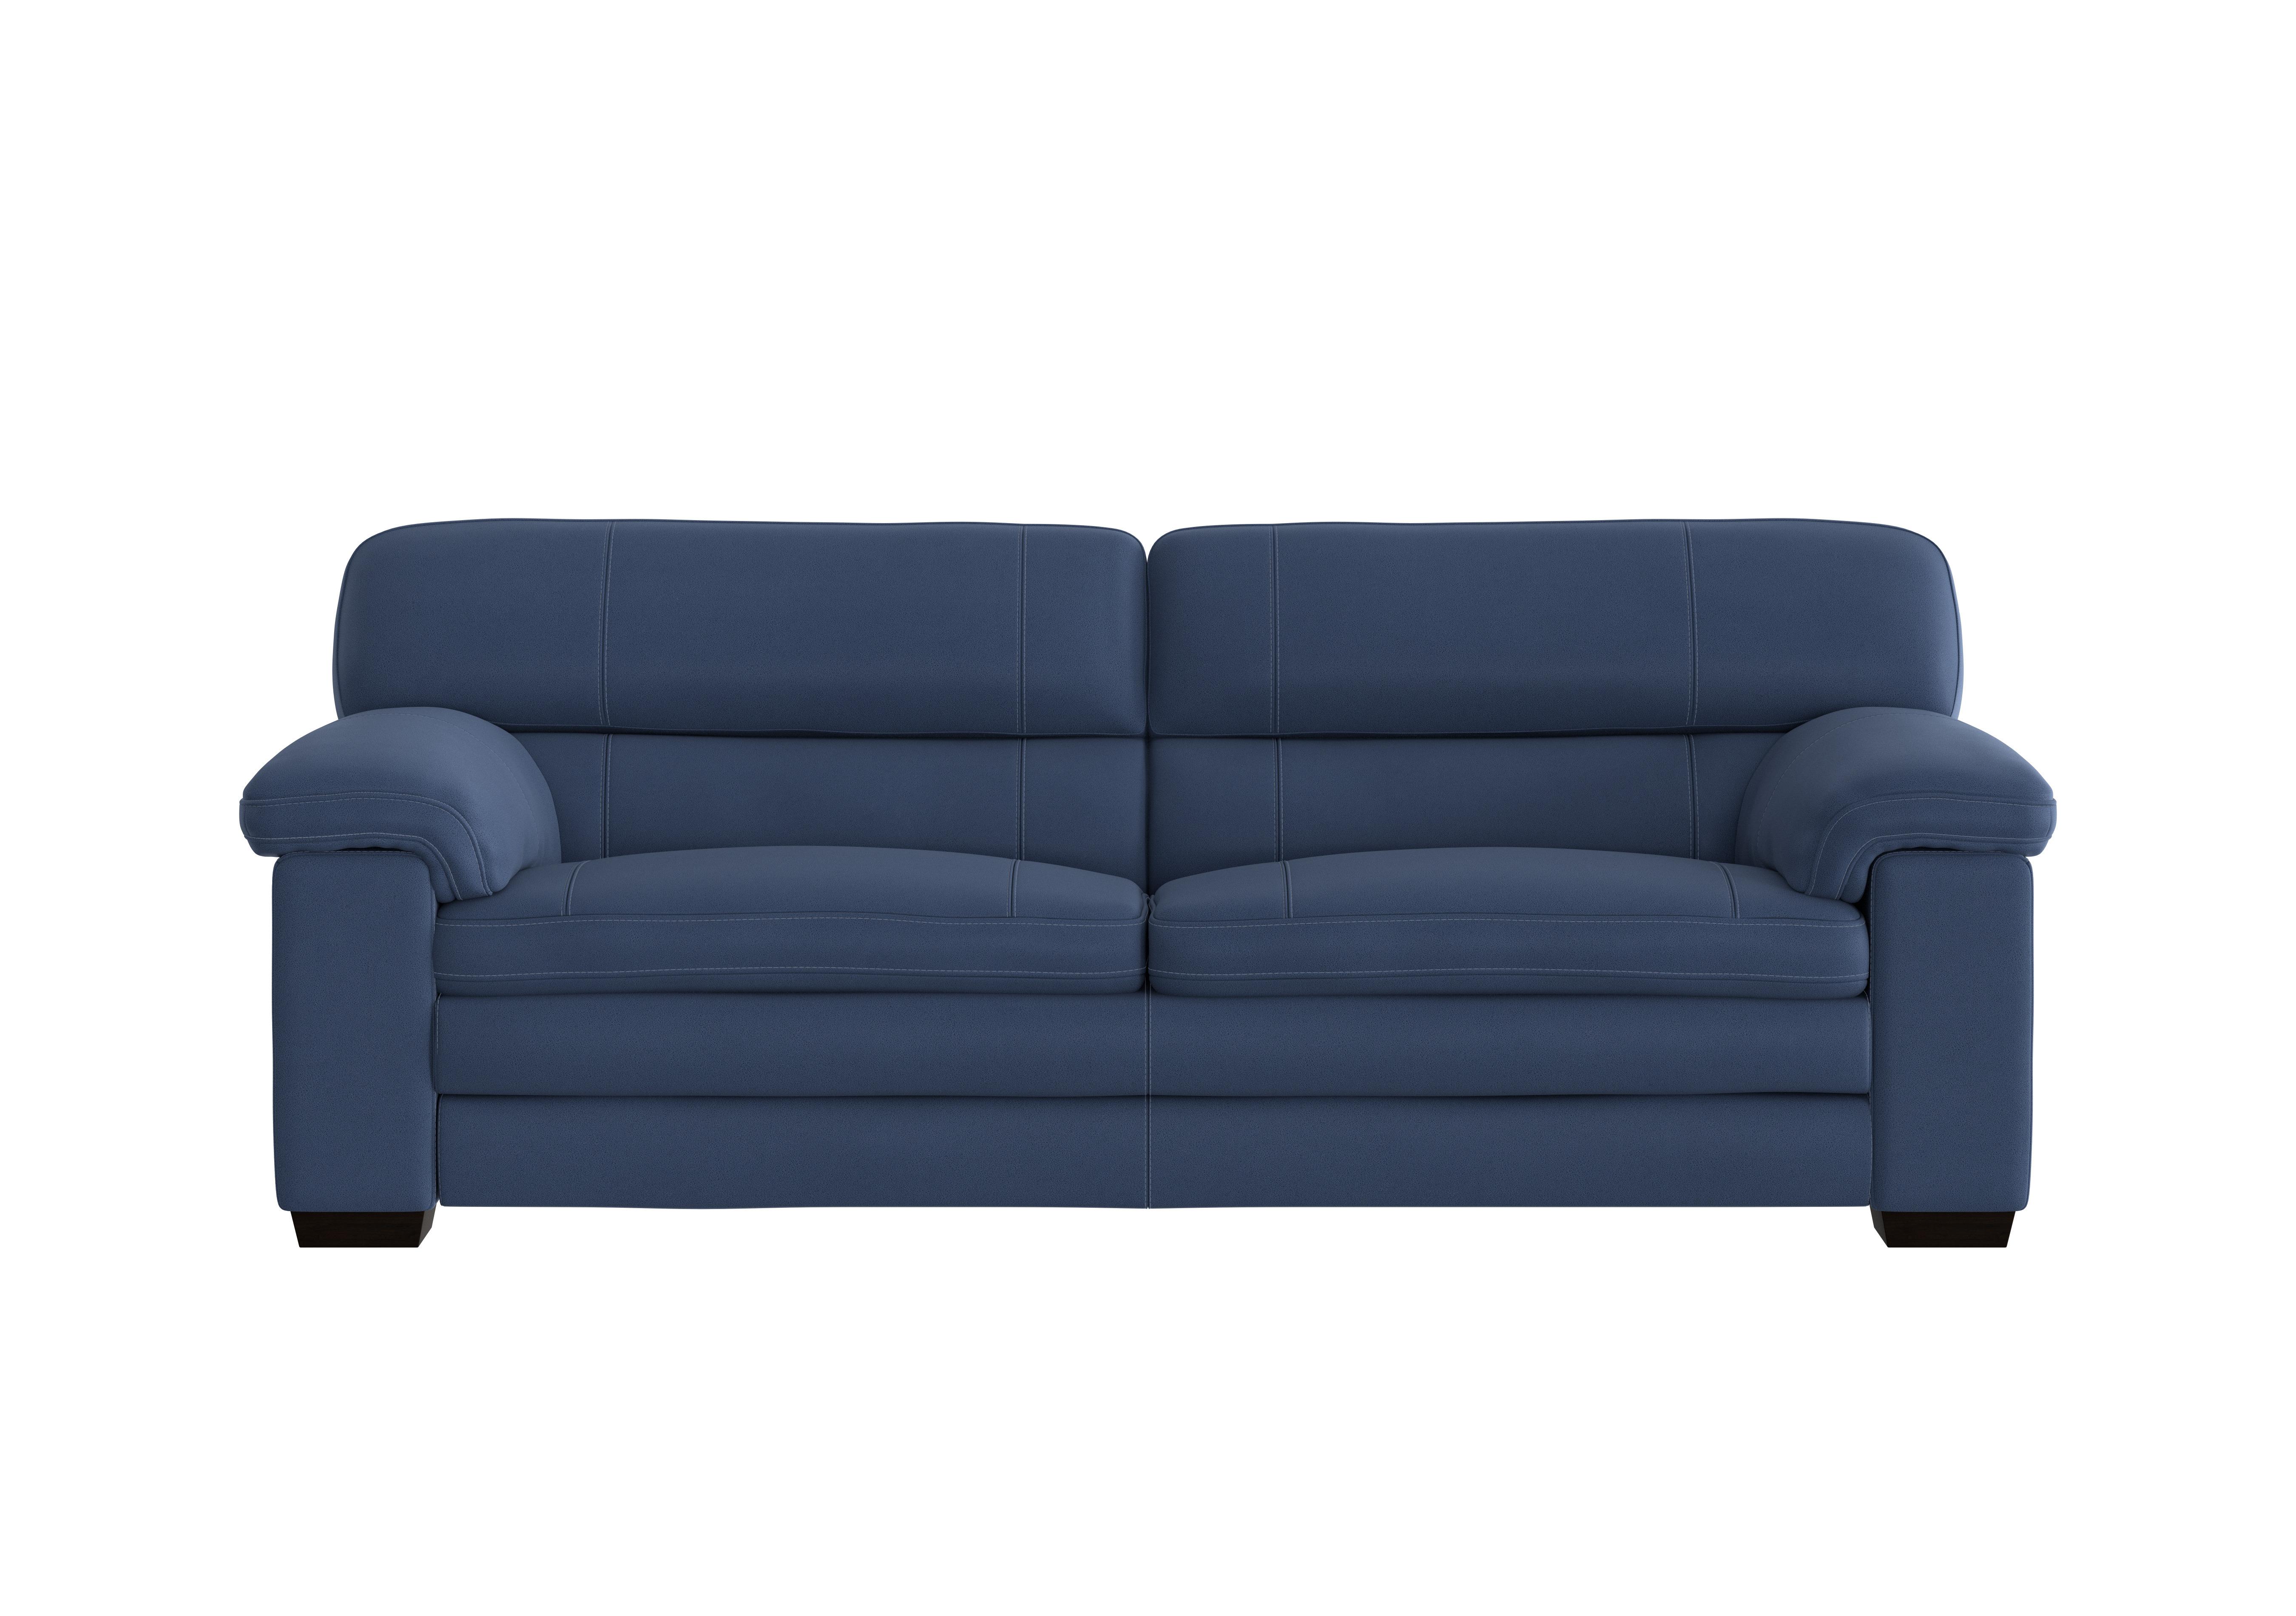 Cozee Fabric 3 Seater Sofa in Bfa-Blj-R10 Blue on Furniture Village